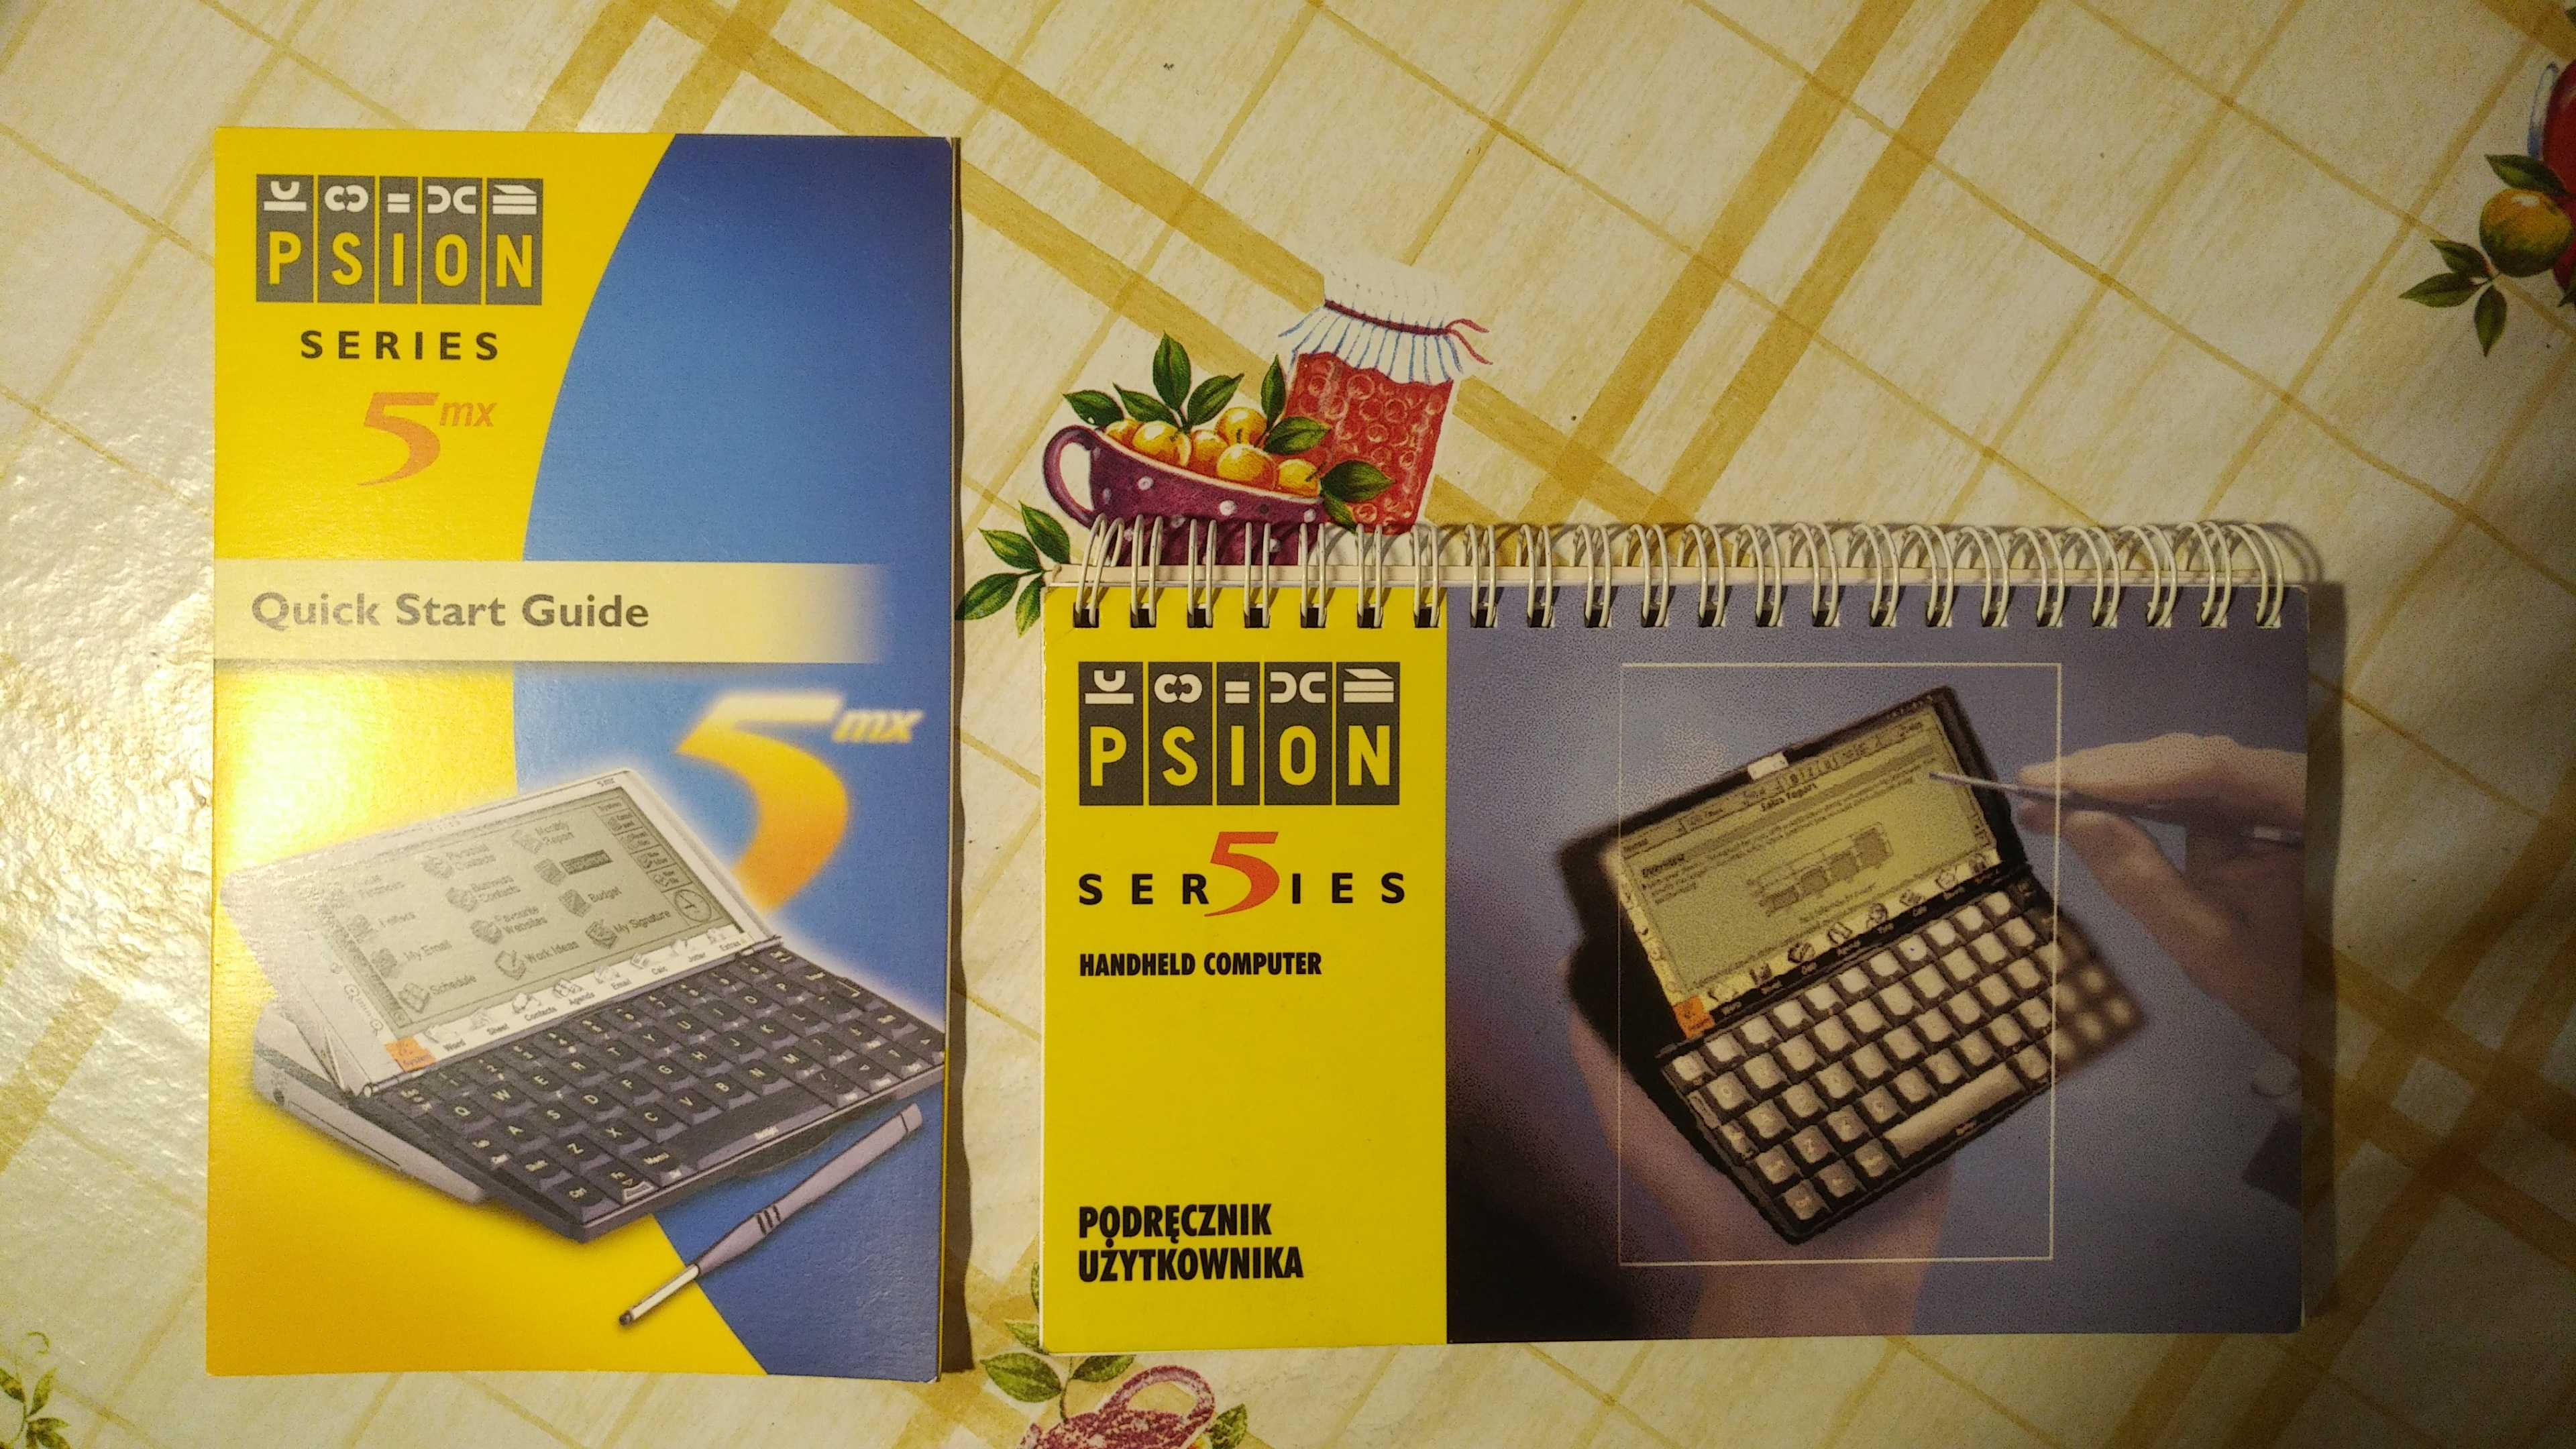 Palmtop Psion mx5